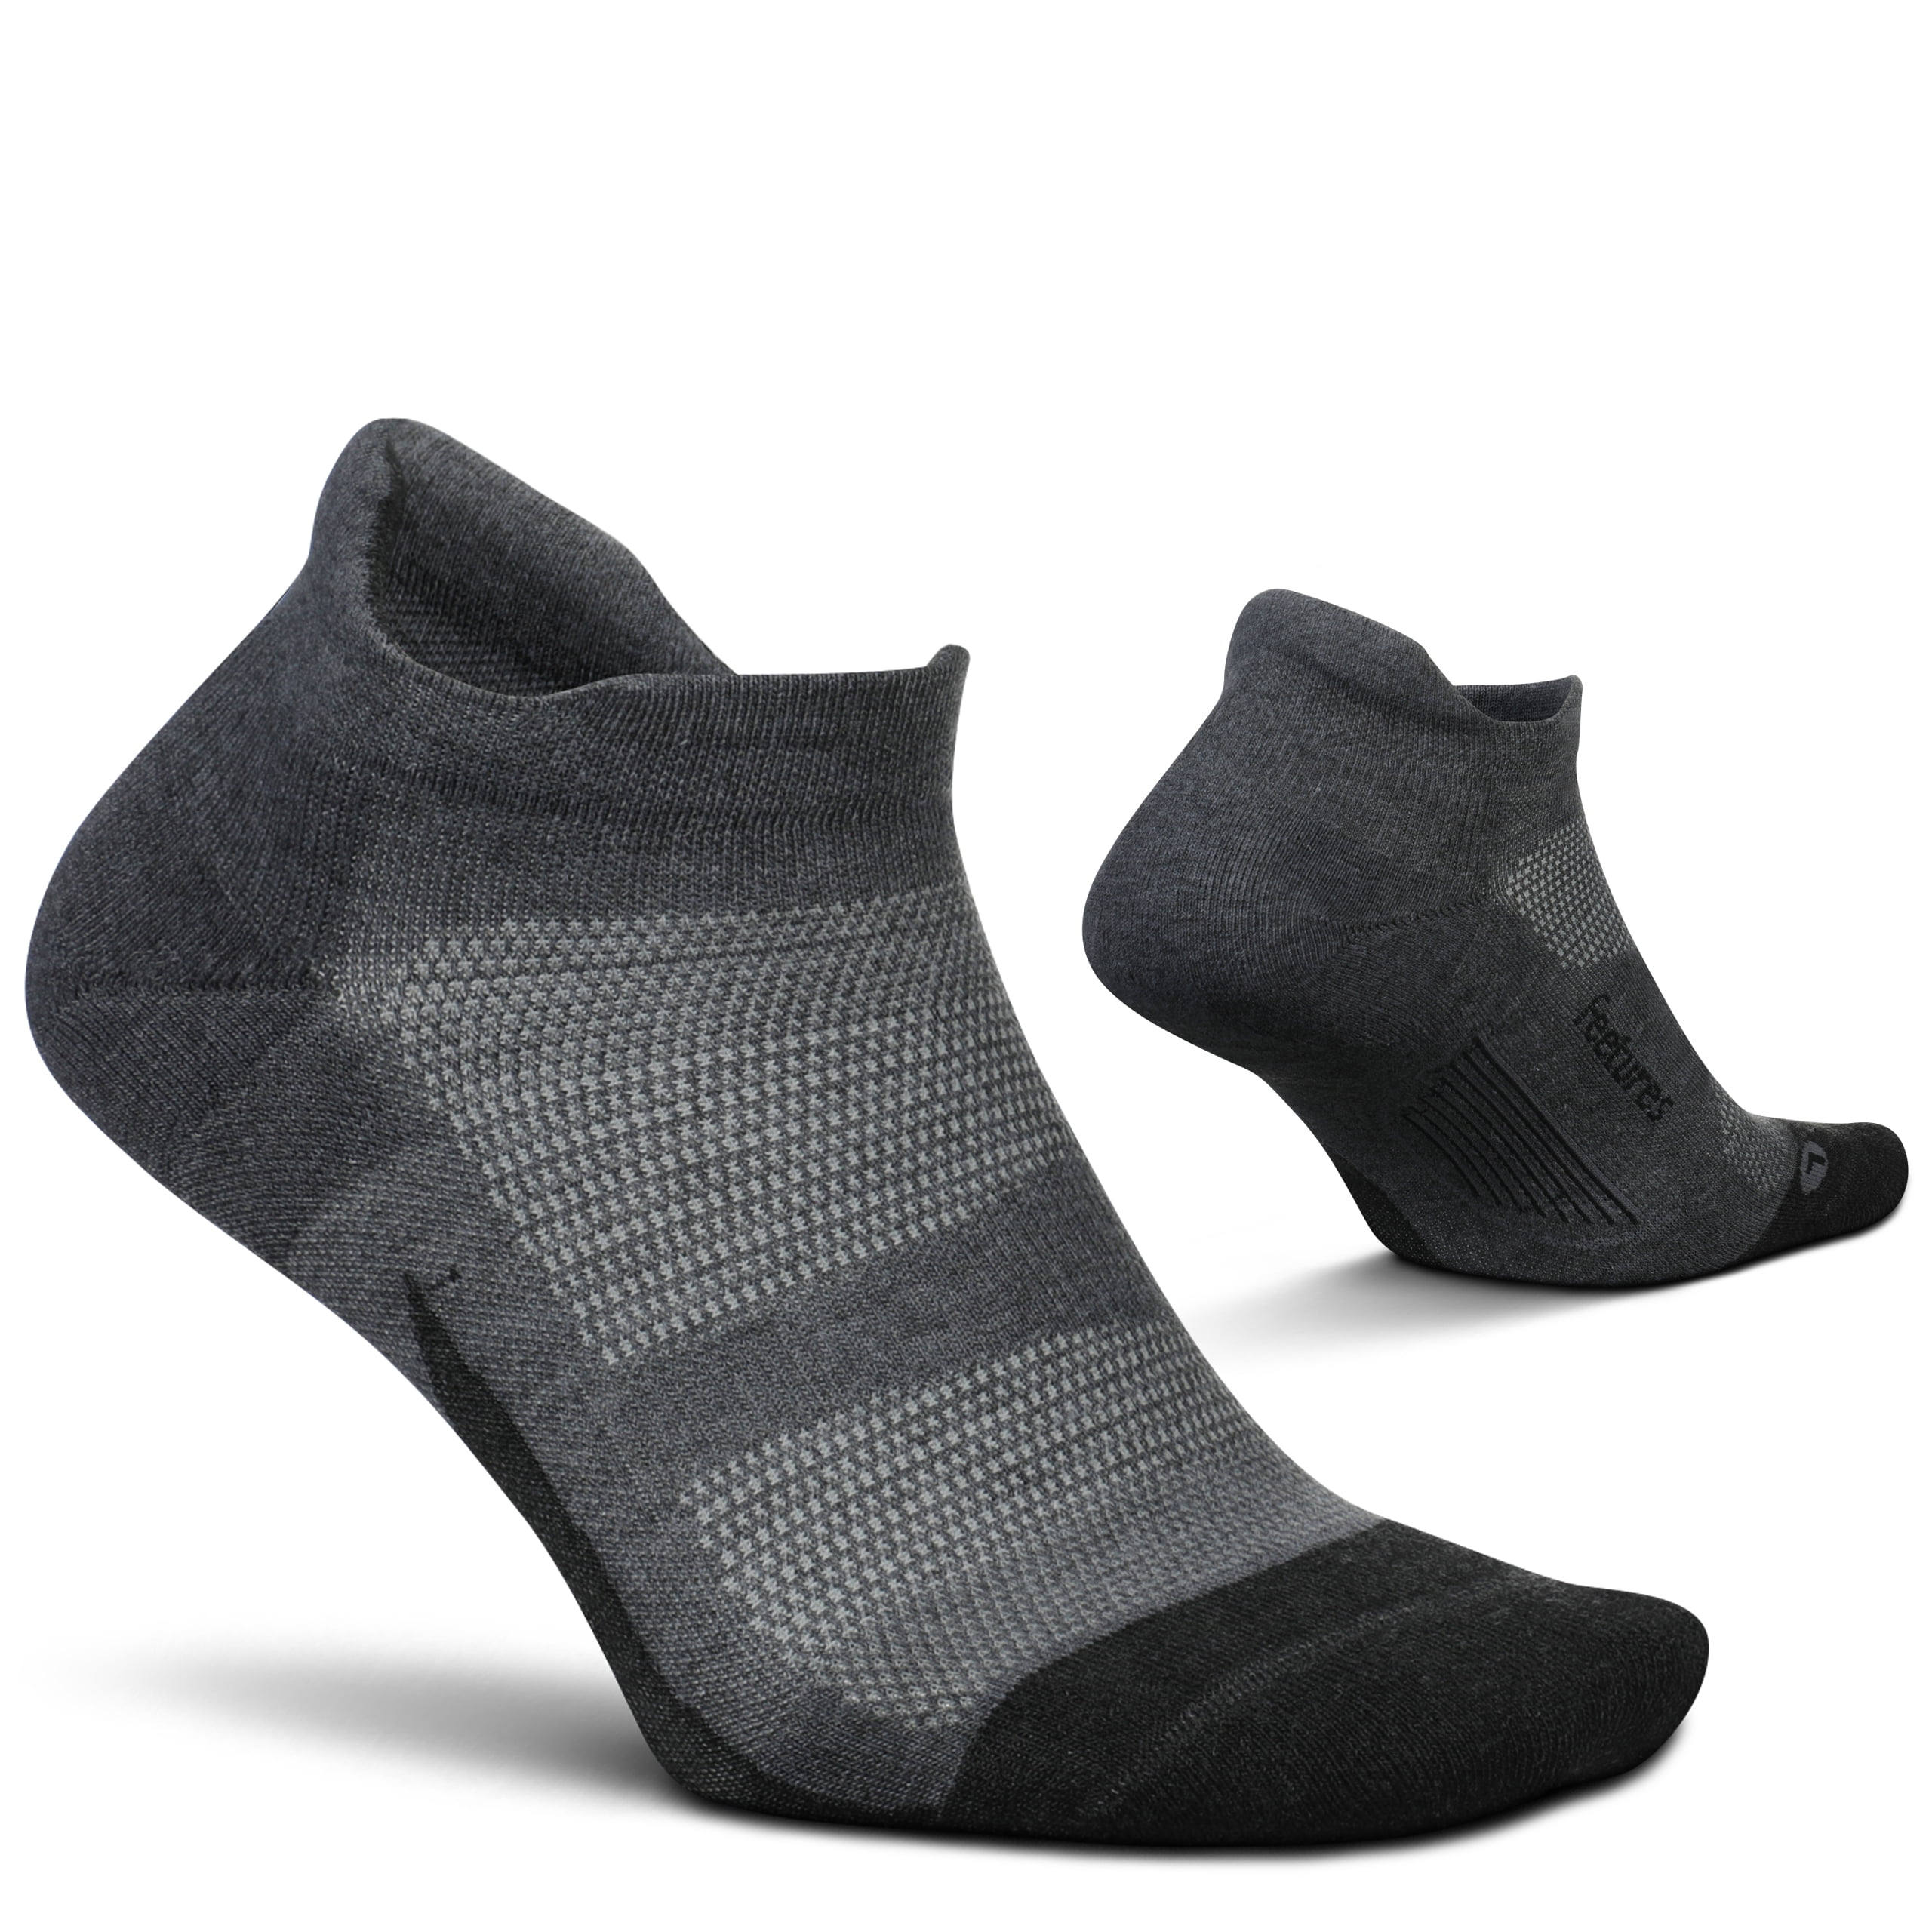 Feetures Elite Max Cushion No Show Tab Block- Running Socks for Men &  Women, Athletic Compression Socks, Moisture Wicking- Large, Black -  Walmart.com